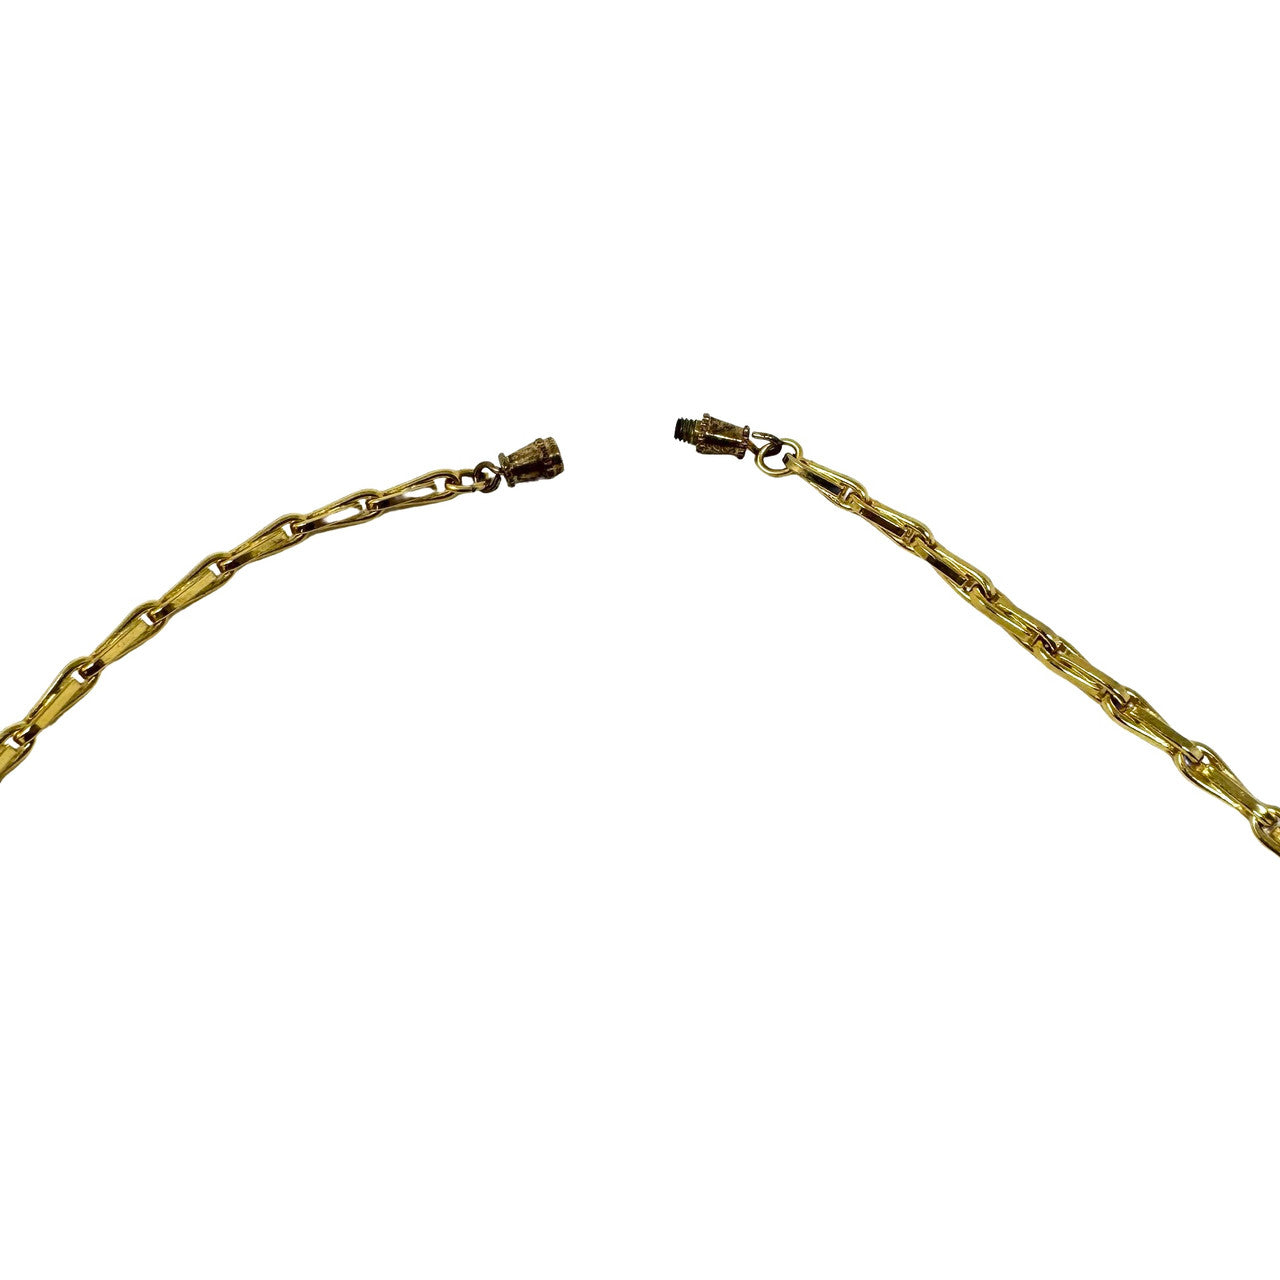 Gold Tone Decorative Chain Necklace